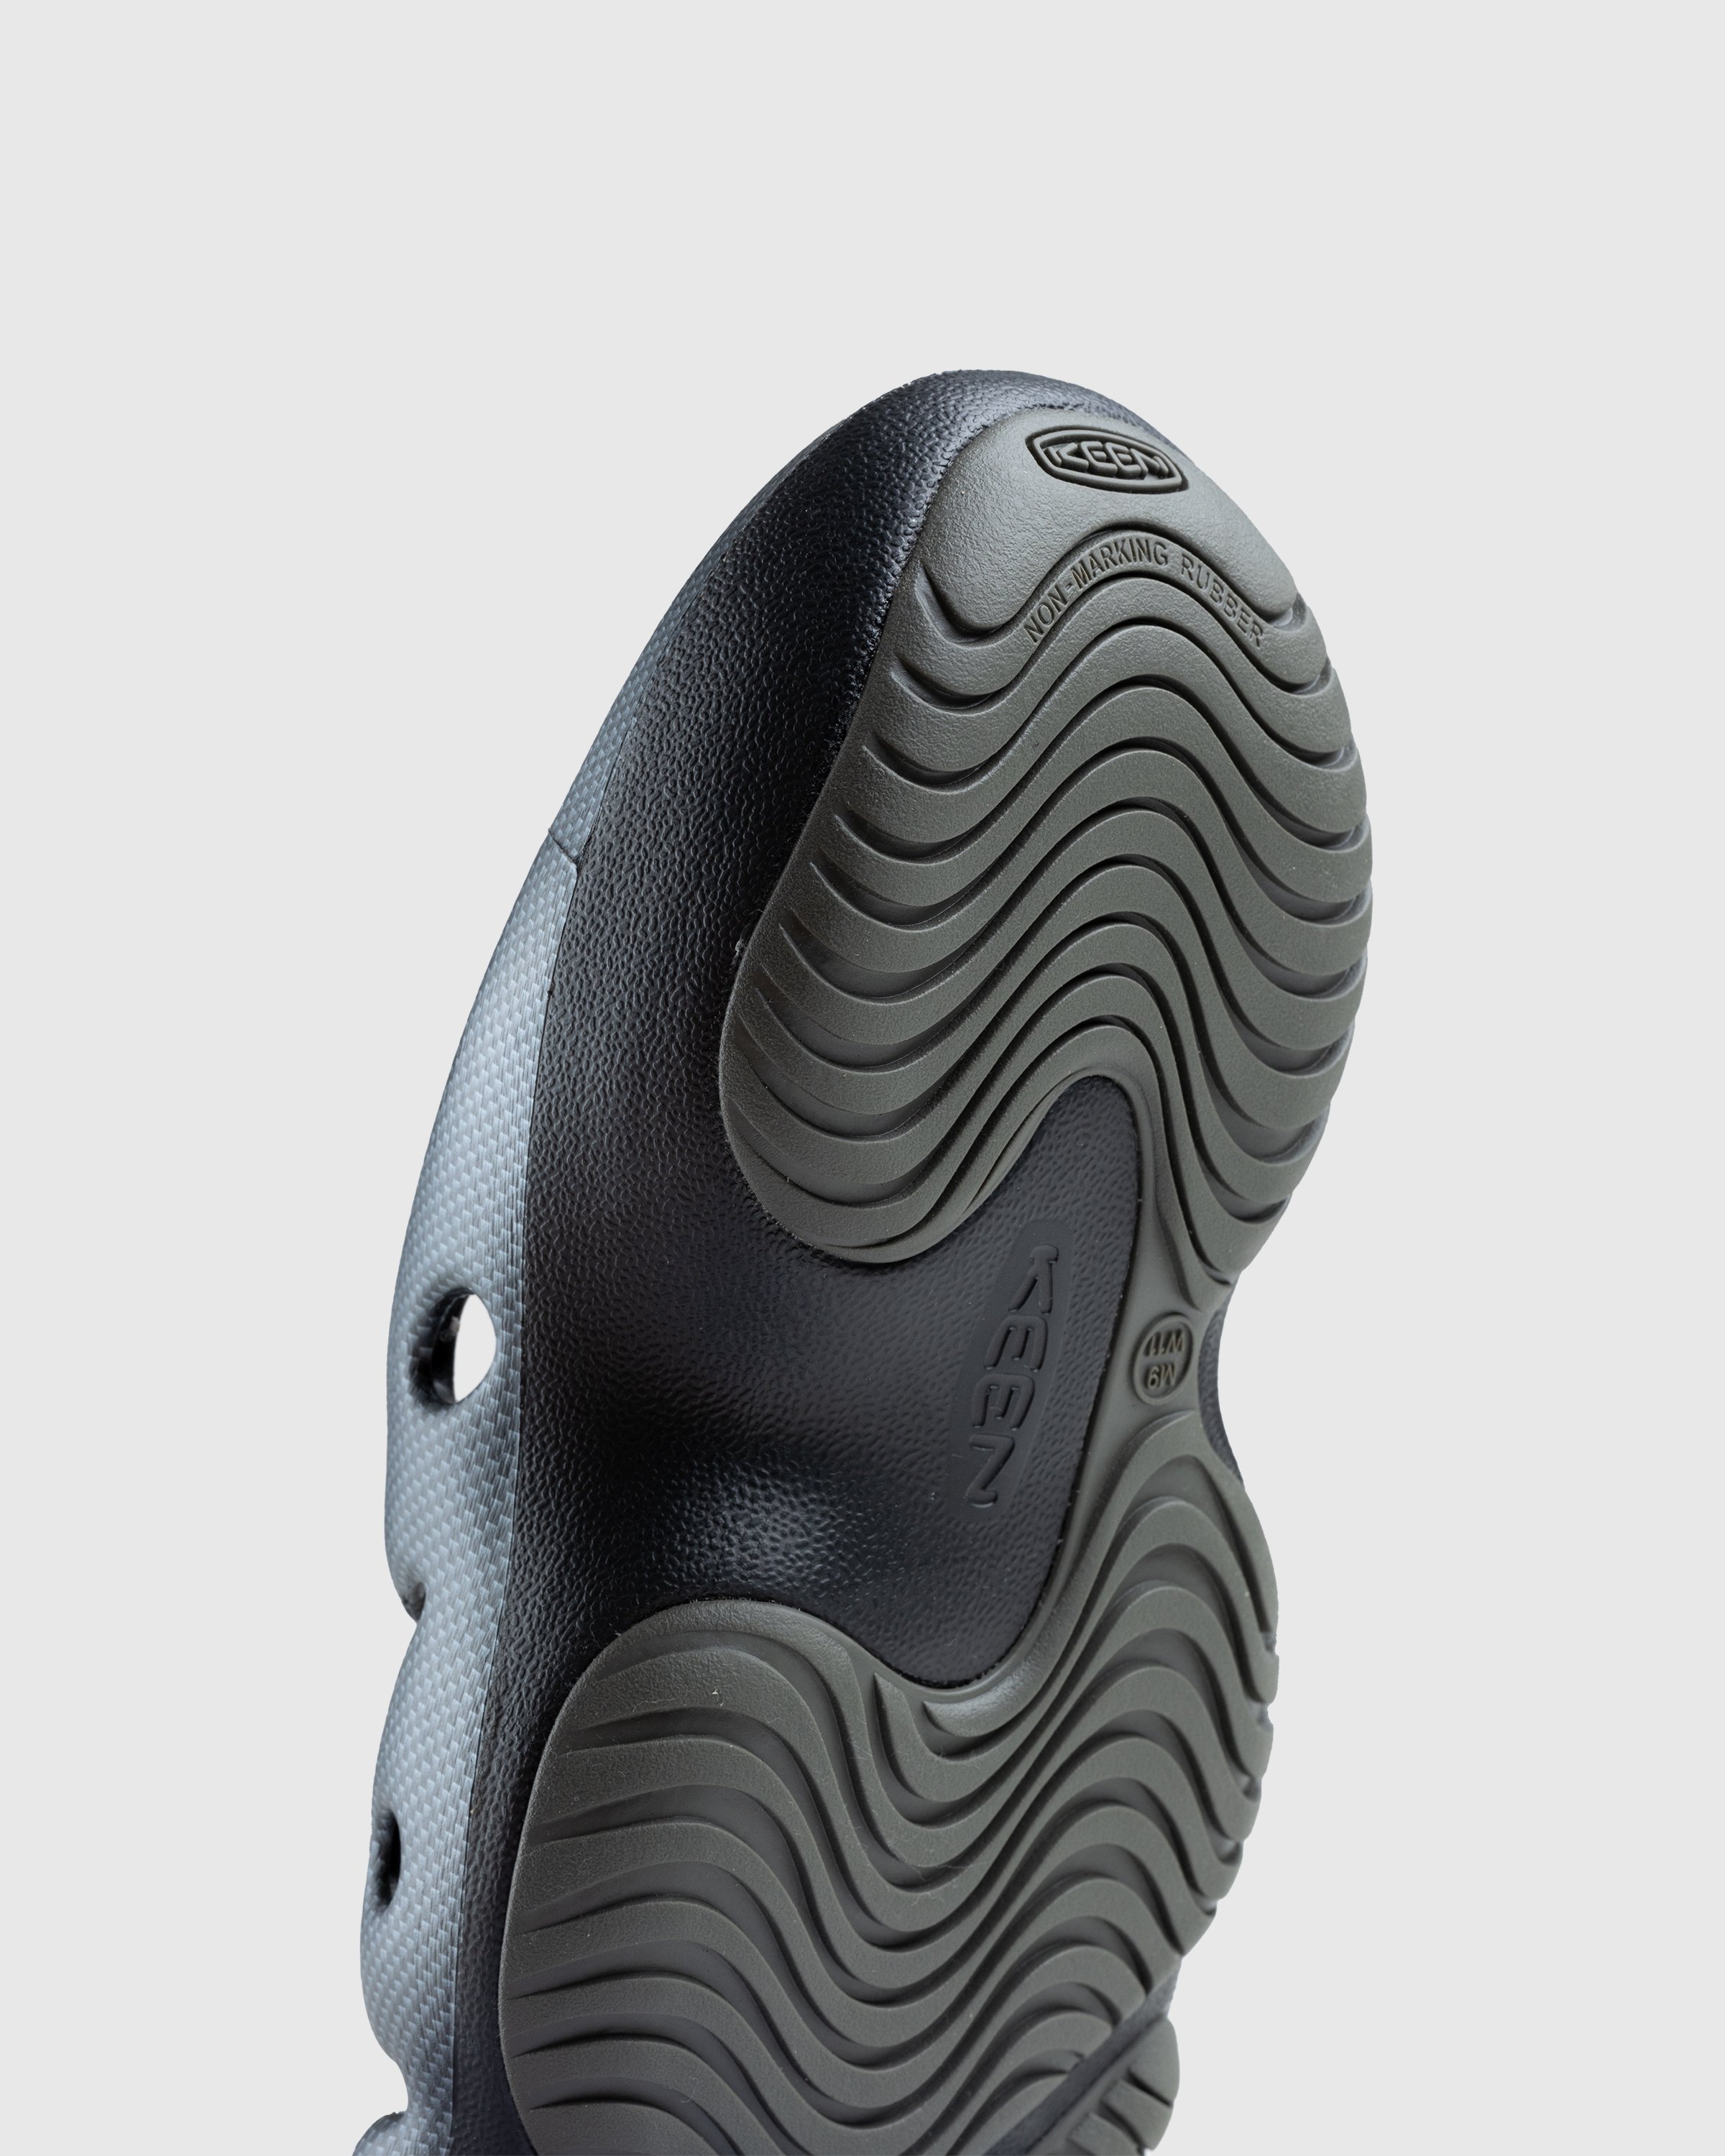 Keen - Yogui Arts Graphite - Footwear - Grey - Image 6